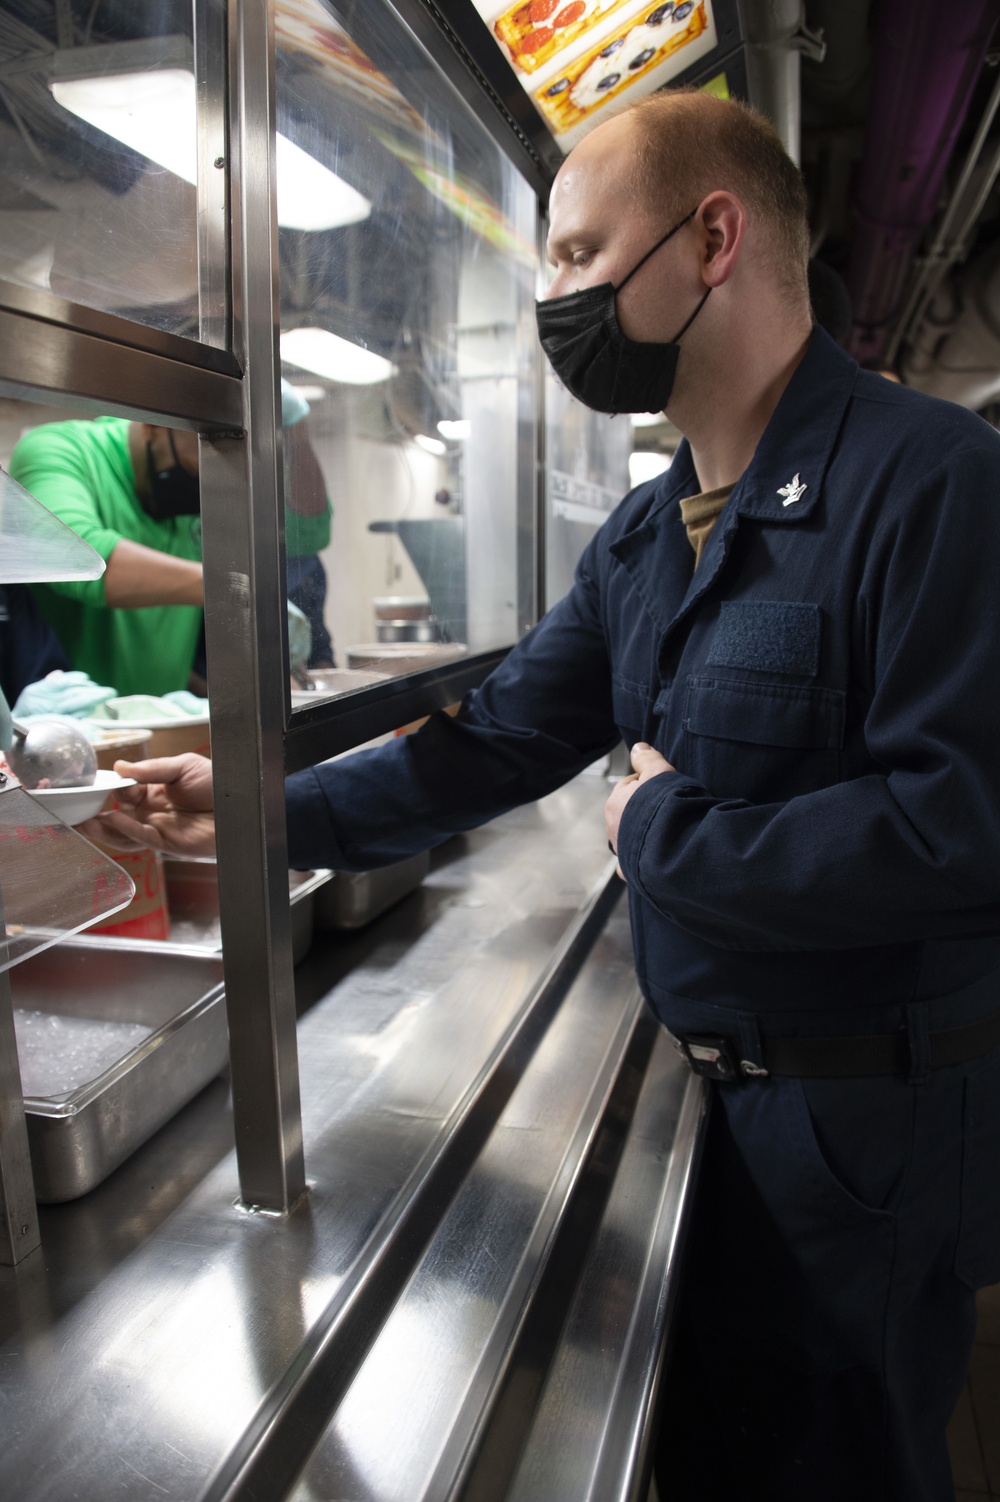 USS Carl Vinson (CVN 70) Hosts an Ice Cream Social on the Mess Decks